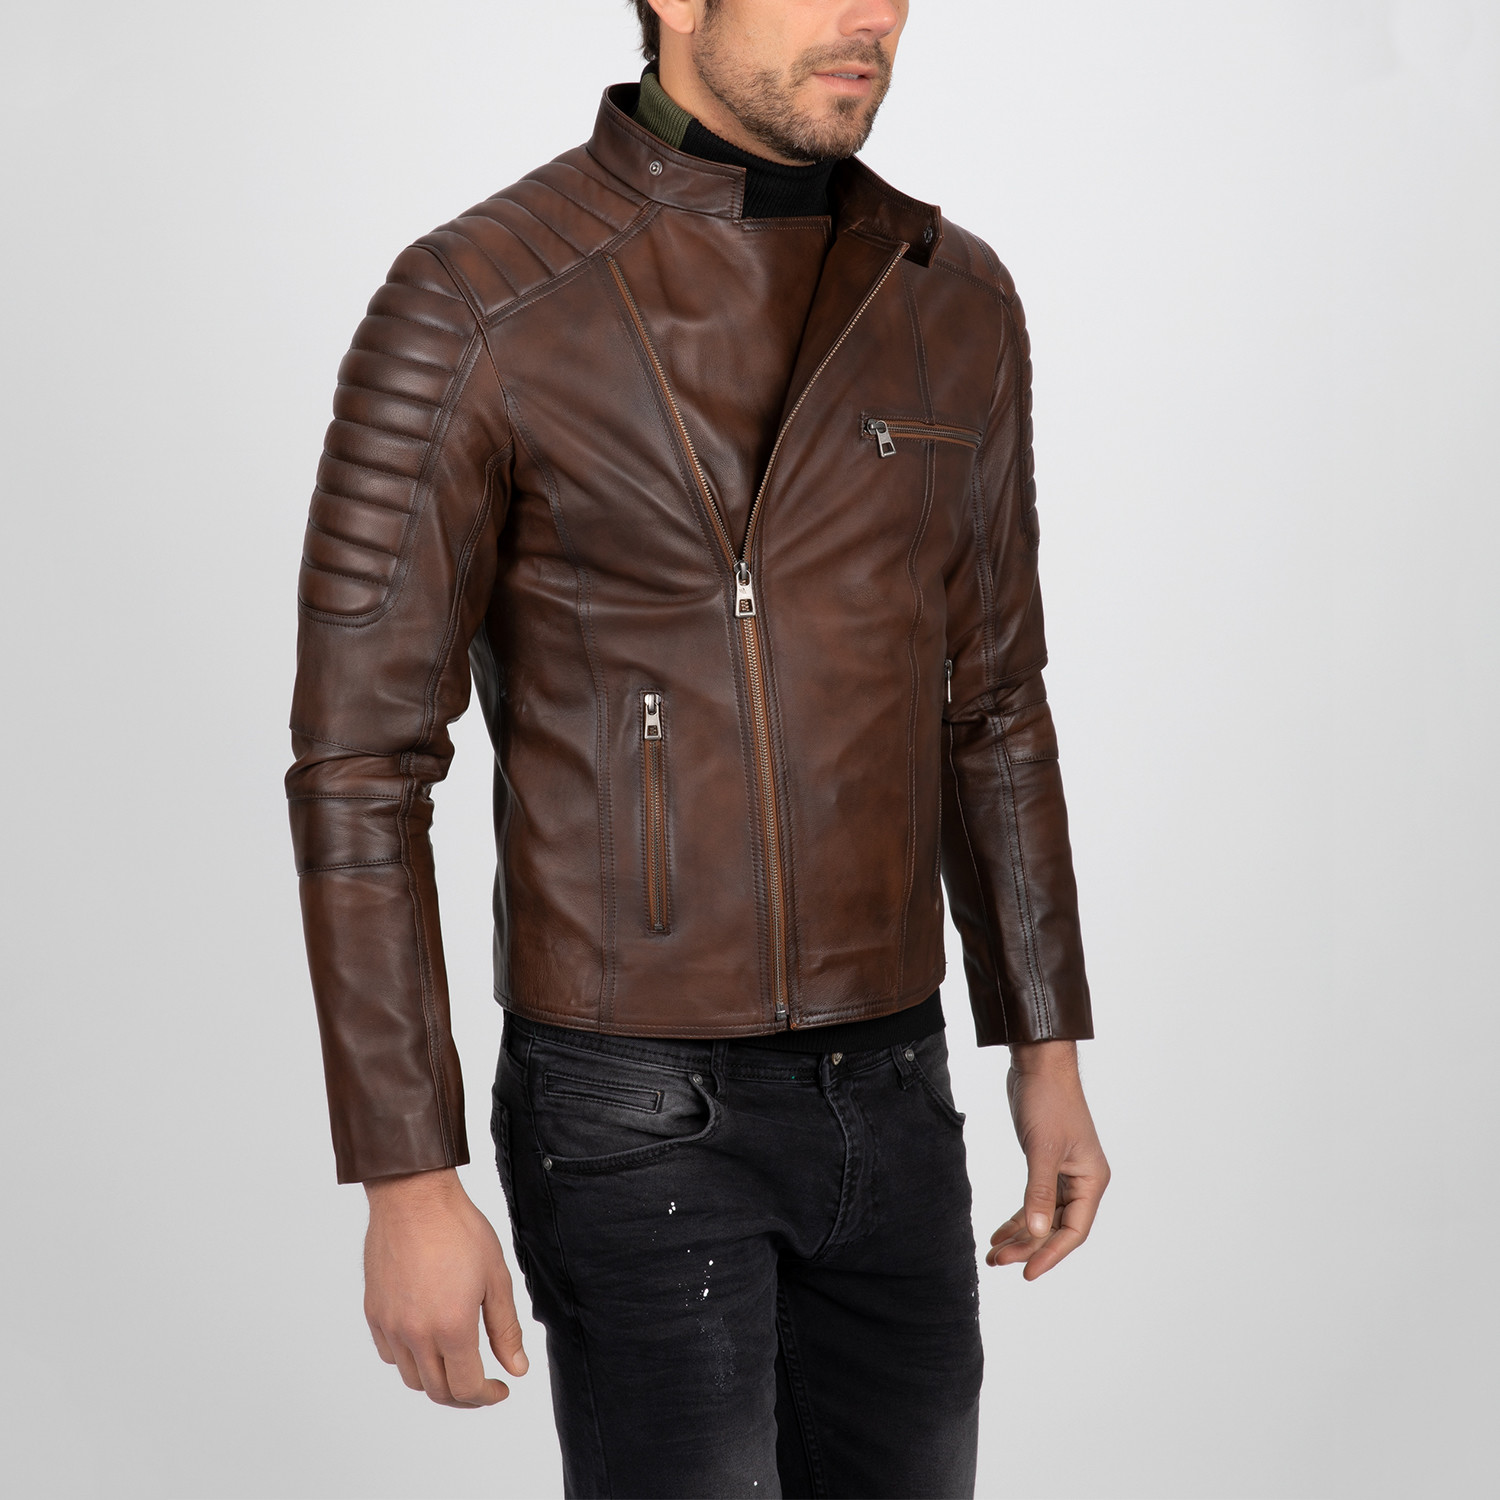 Zip up leather jacket